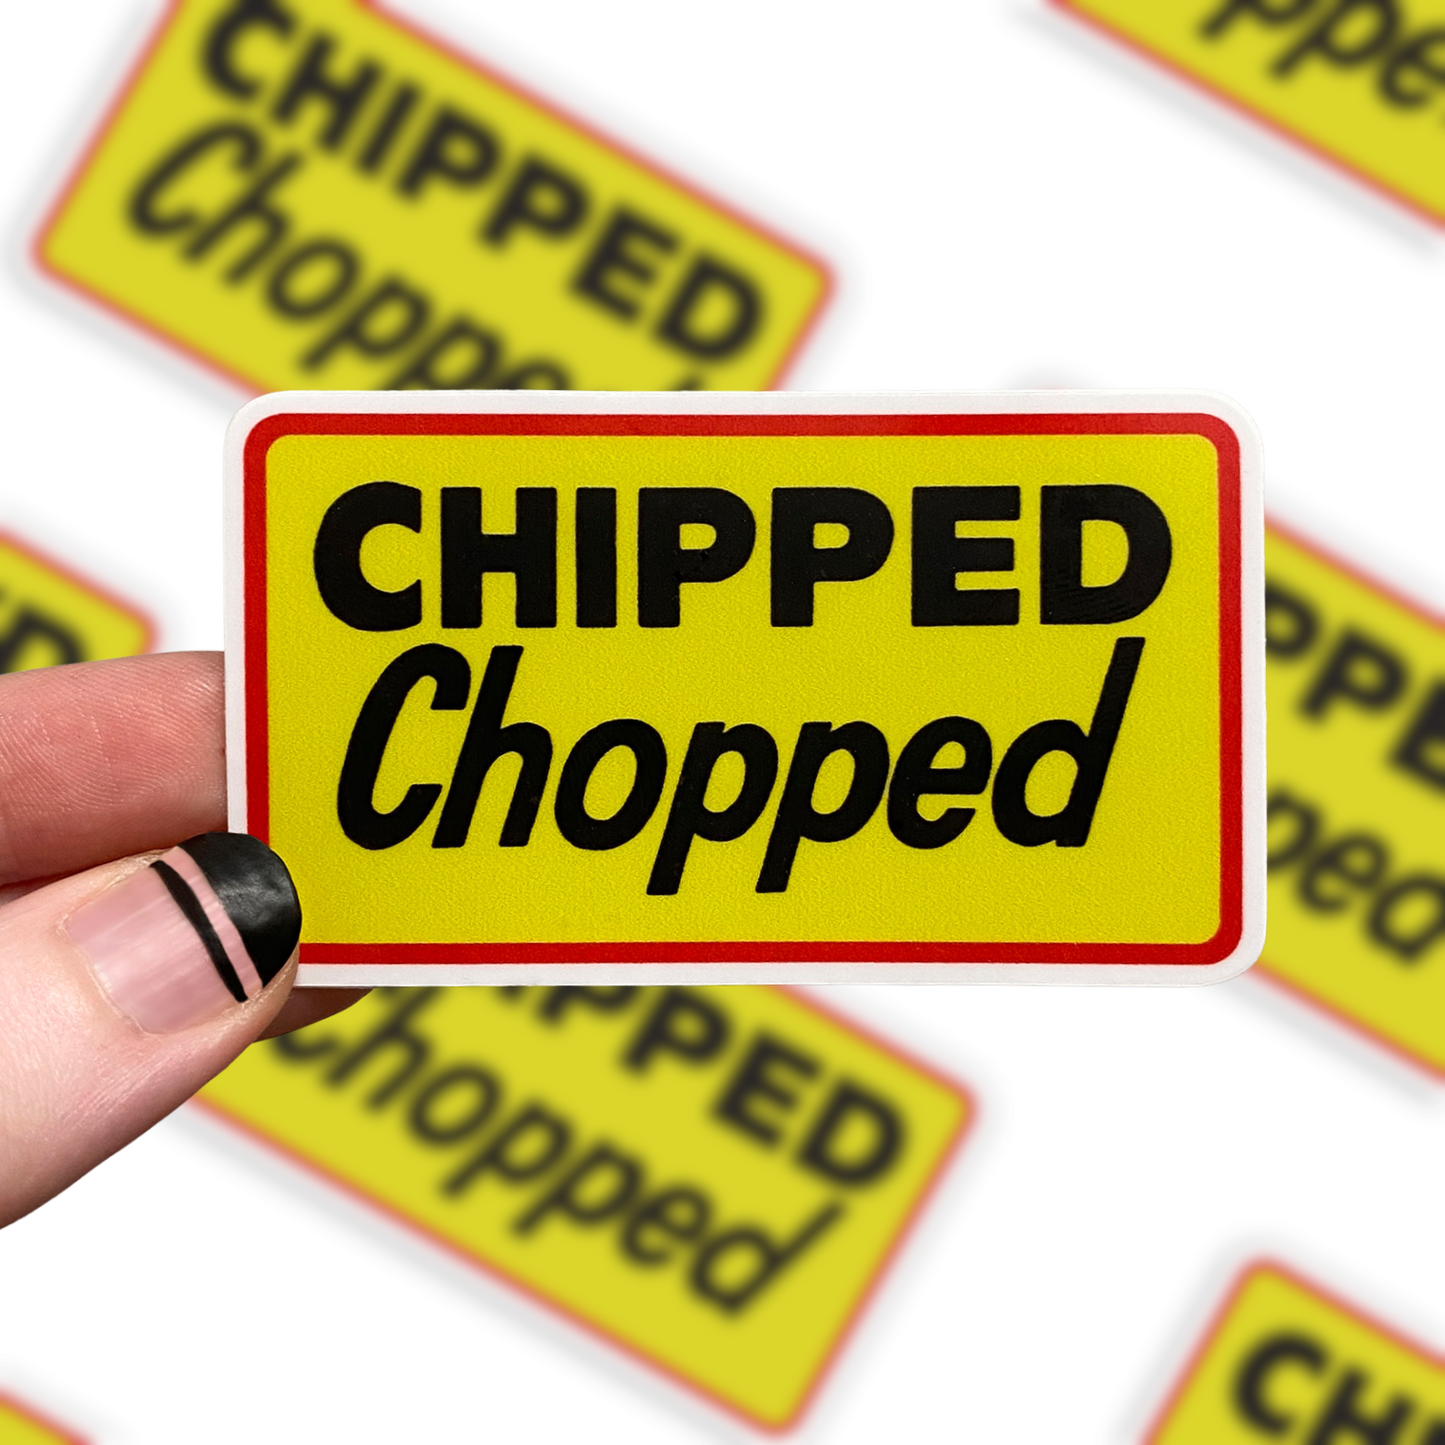 Chipped Chopped